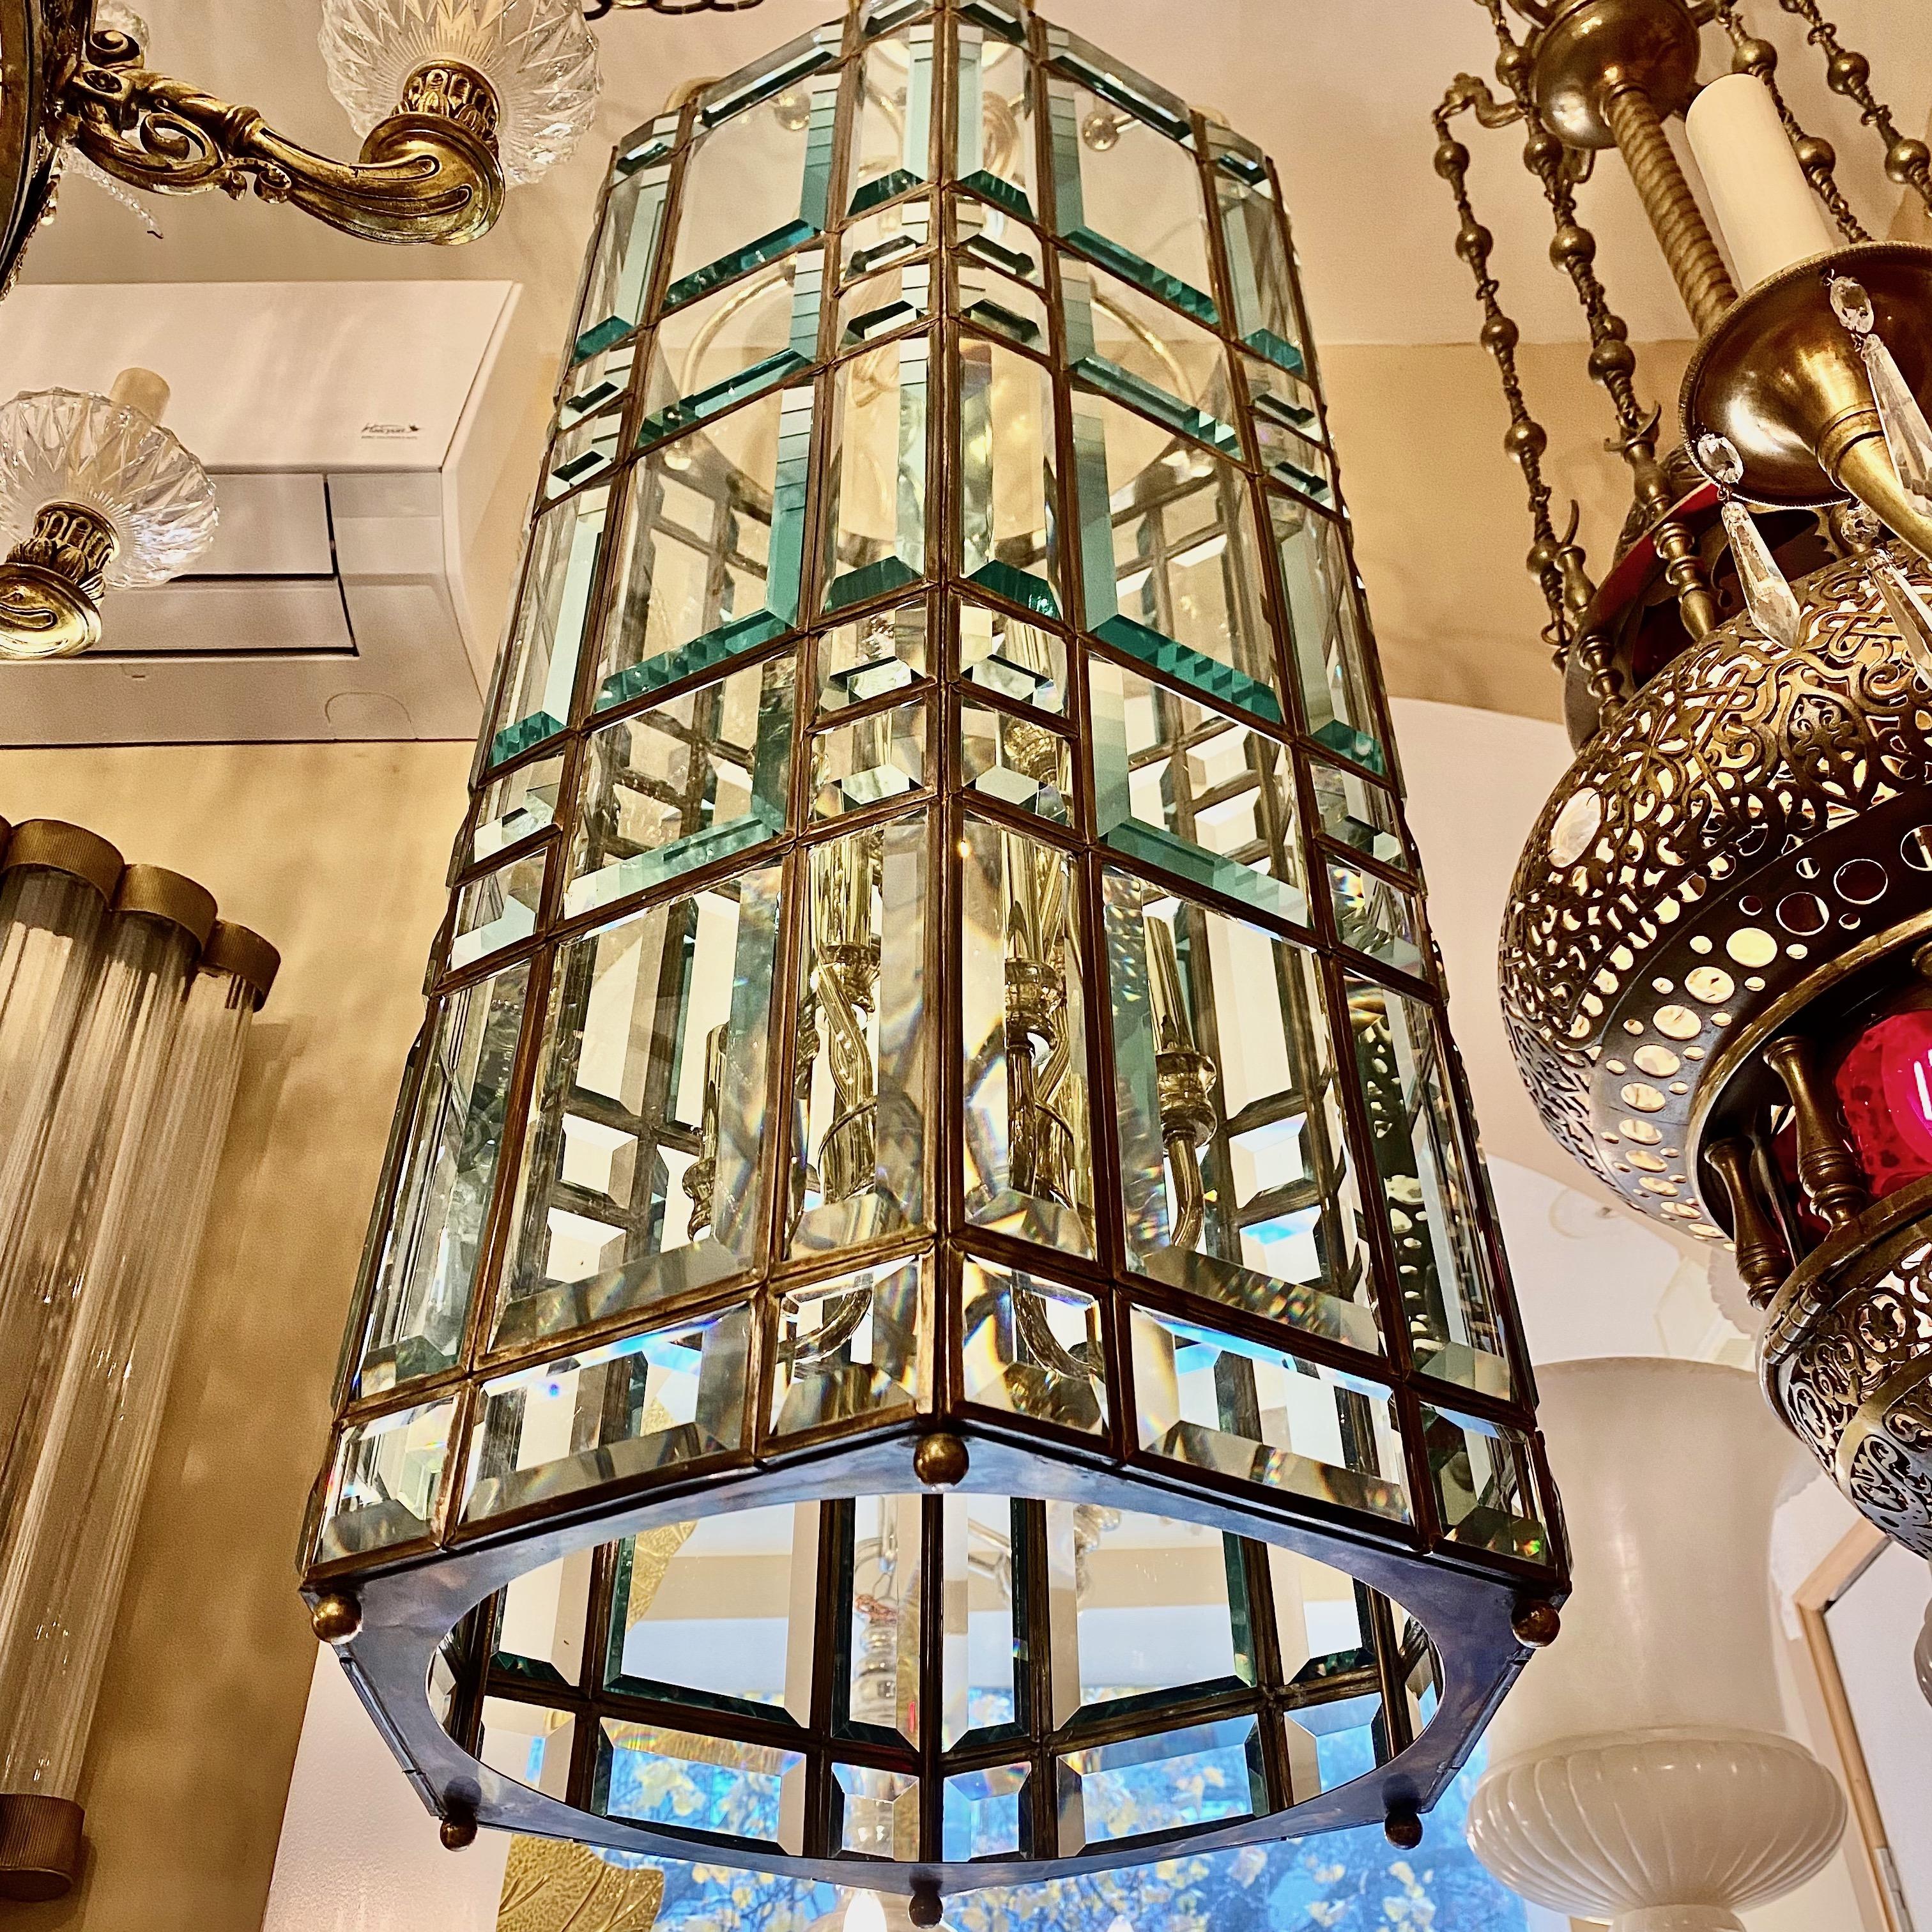 Italian bevelled glass lantern with 12 interior lights. Original patina, circa 1960s.
Measurements:
Present drop 41